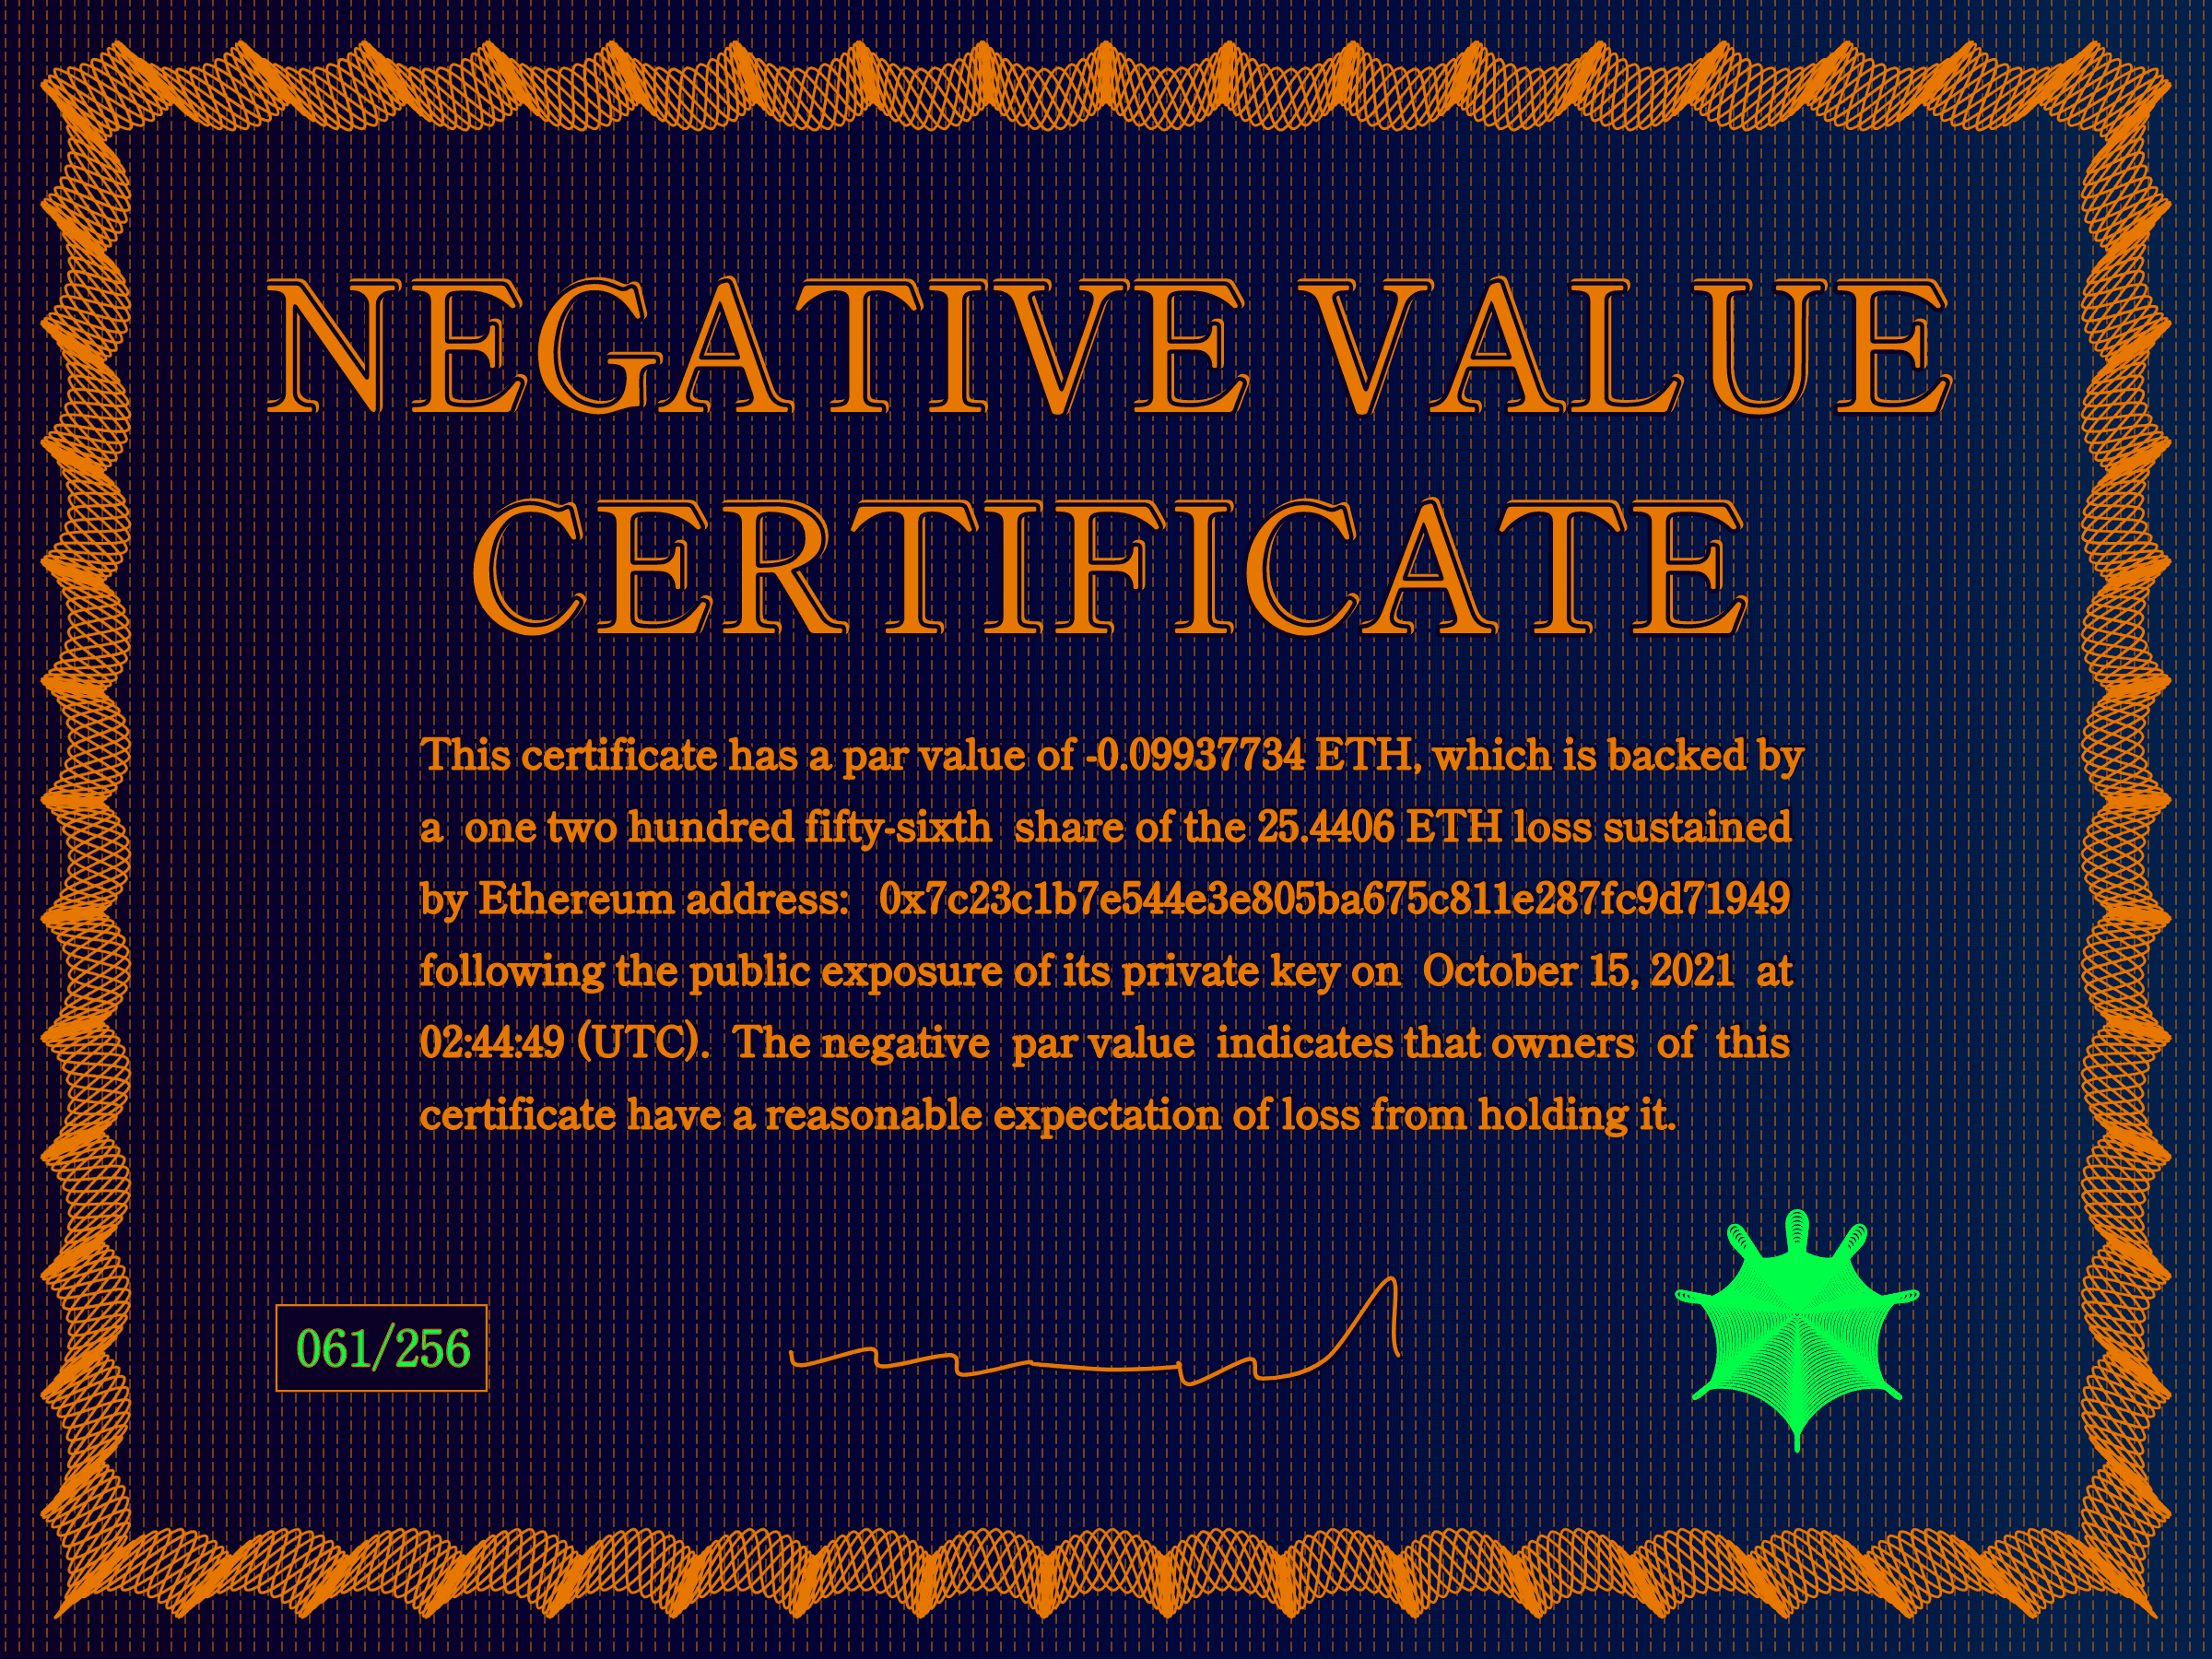 Negative Value Certificate #61 of 256